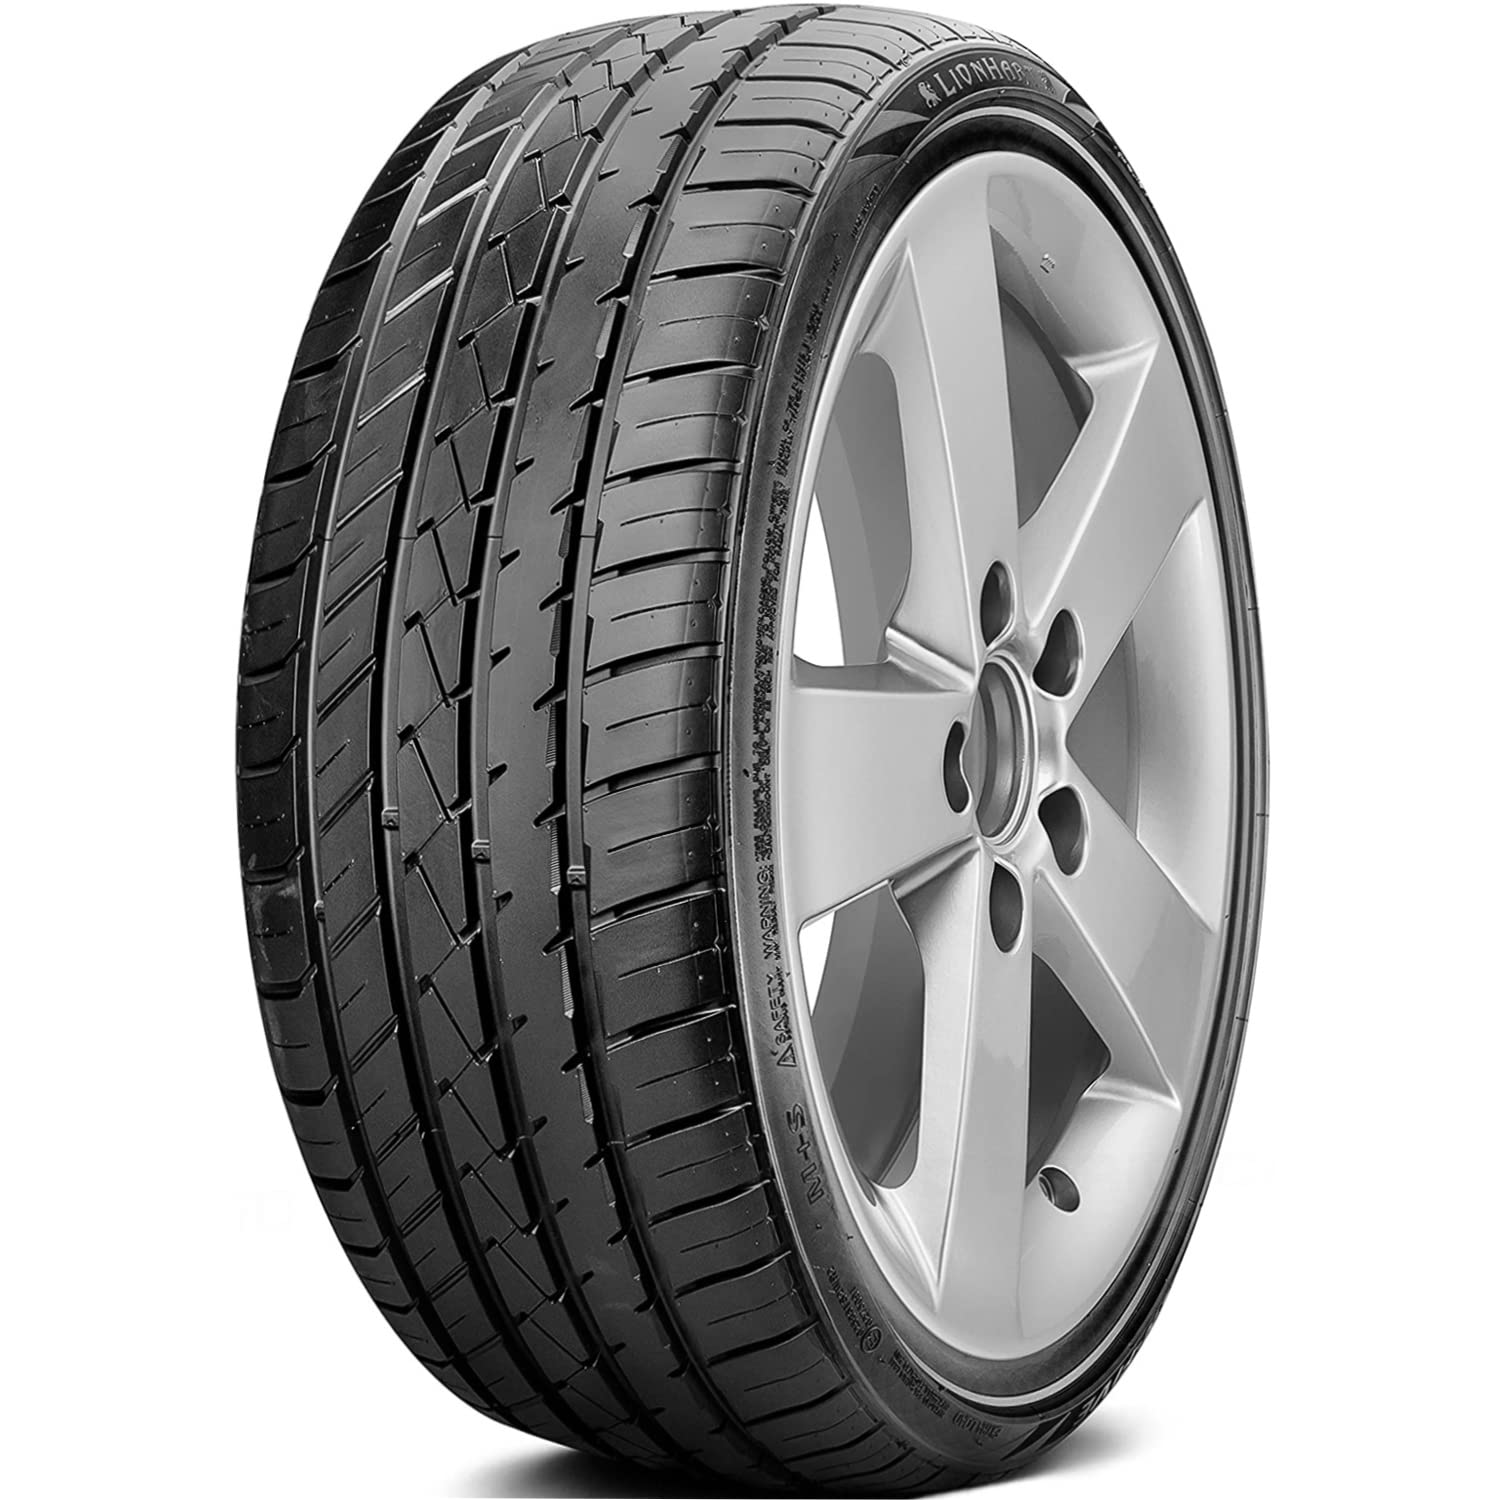 LIONHART LH-FIVE 275/35ZR24 (31.6X10.8R 24) Tires